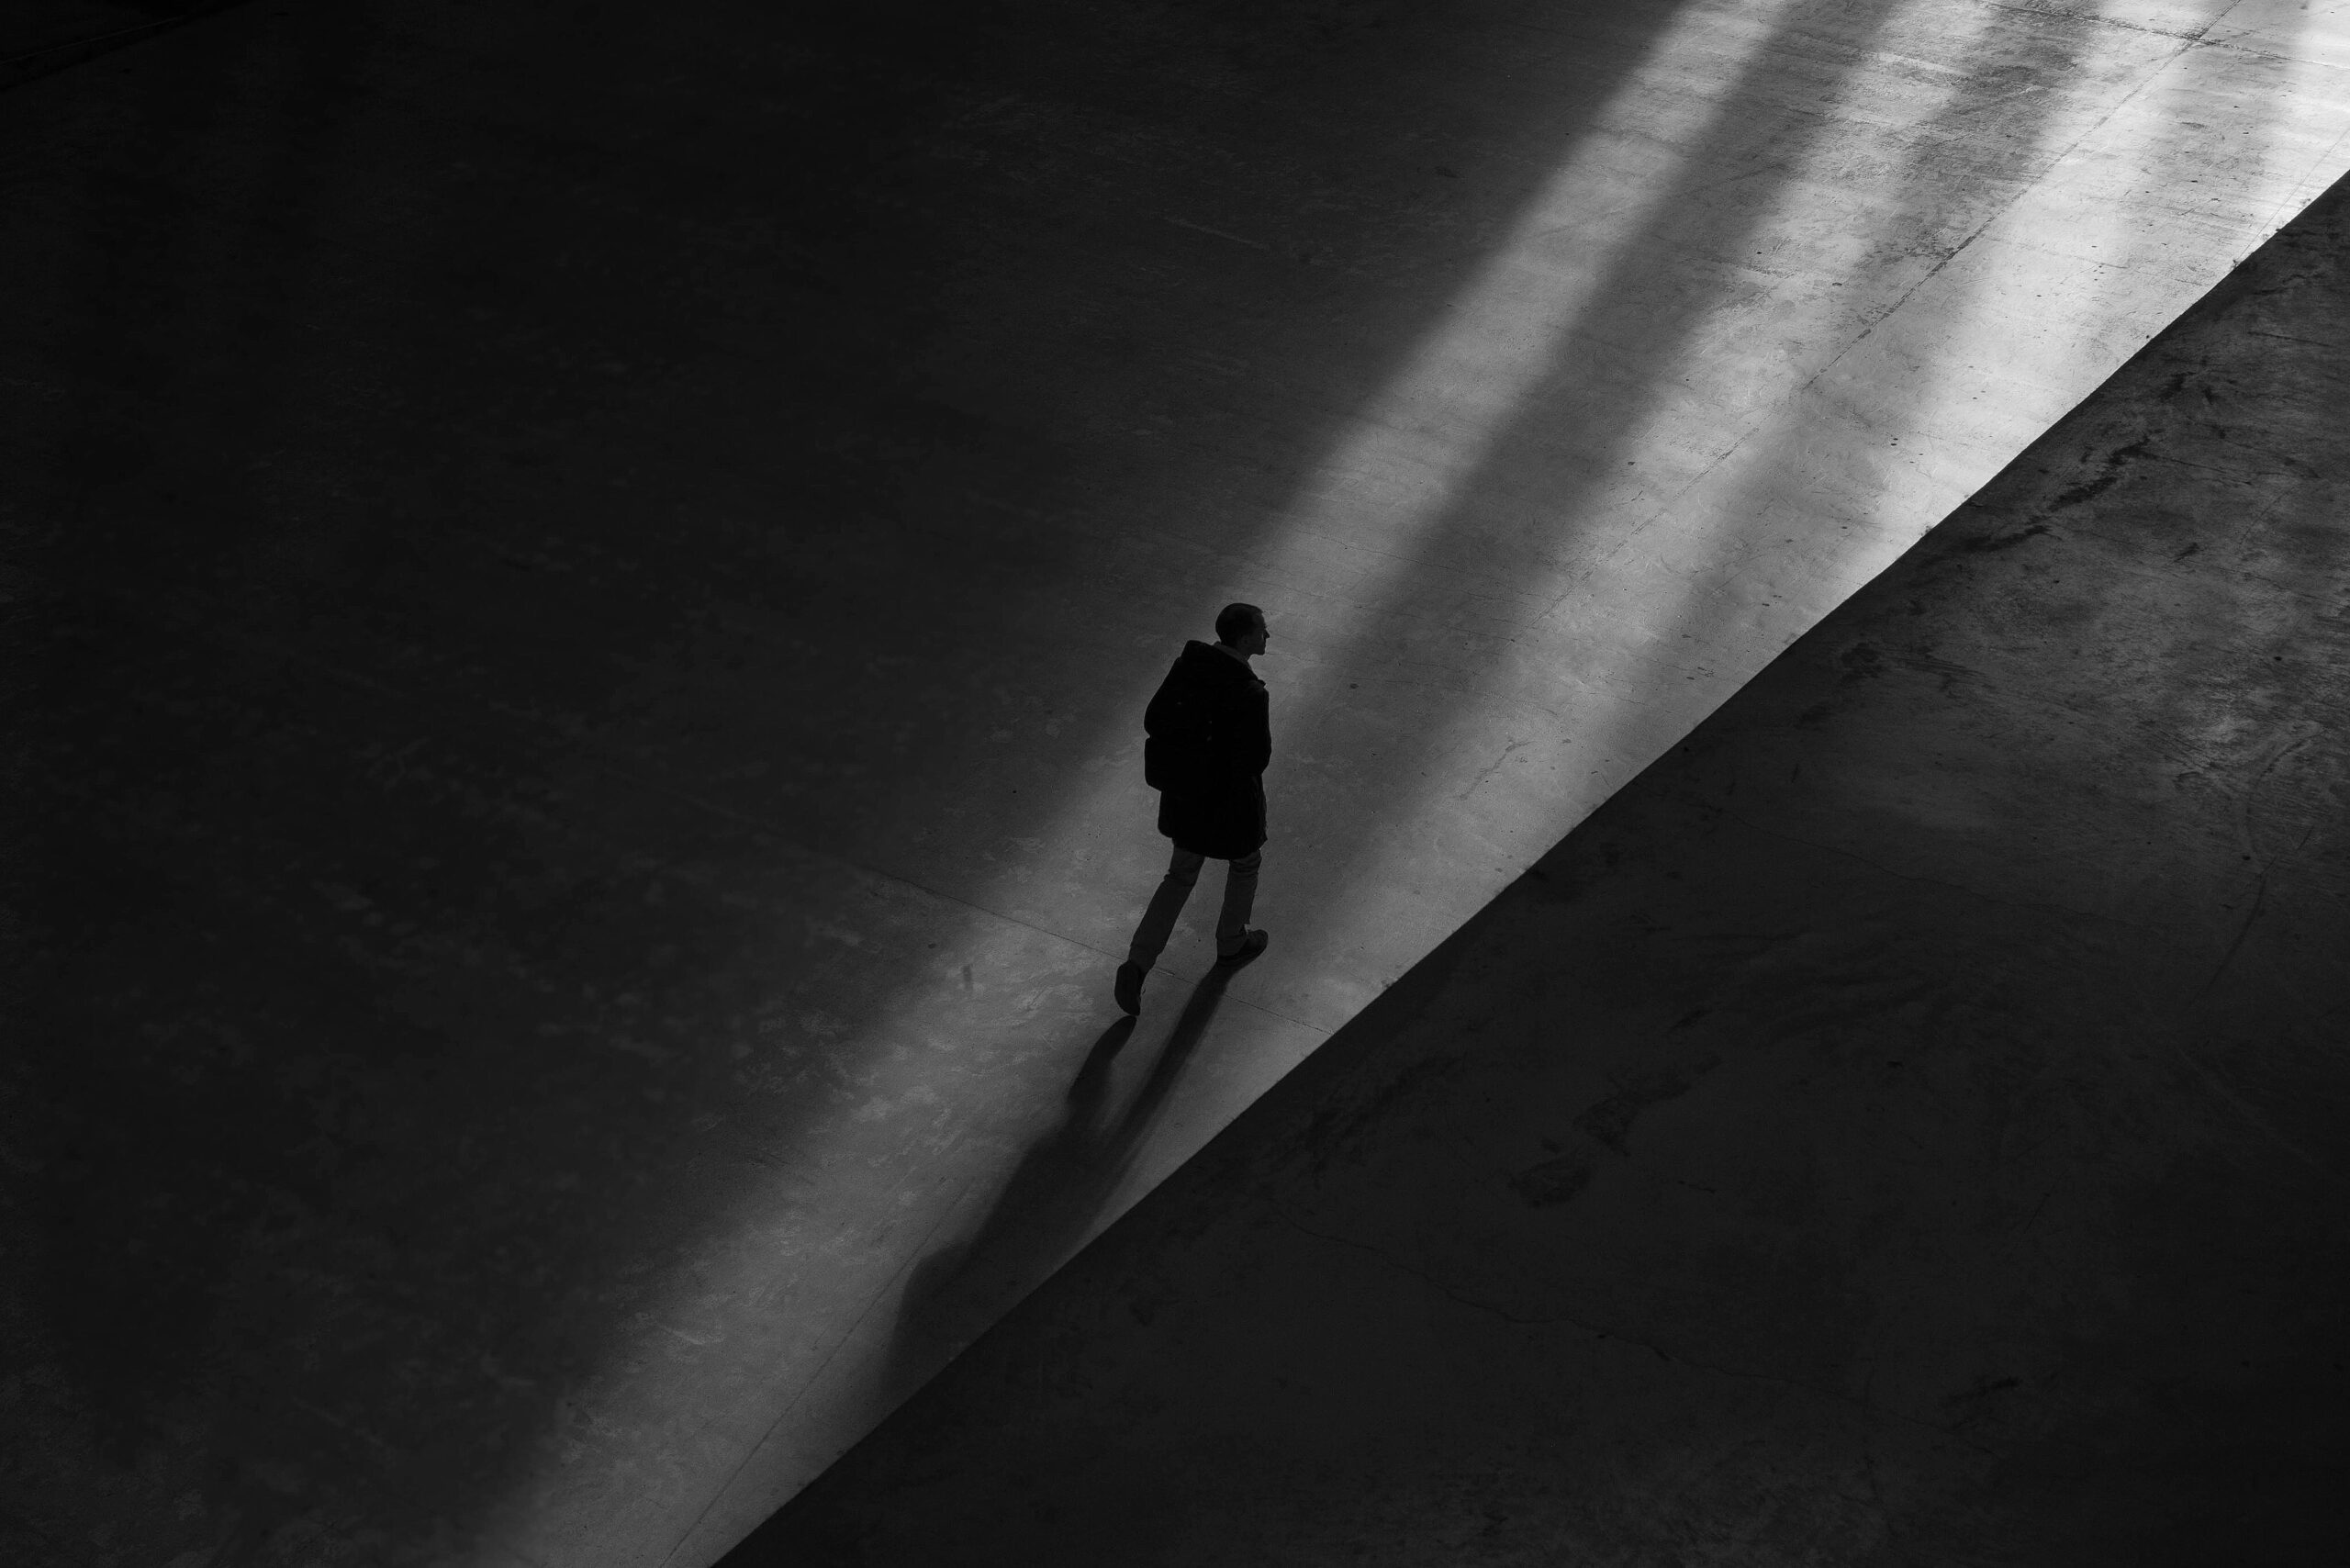 A man walking down a path